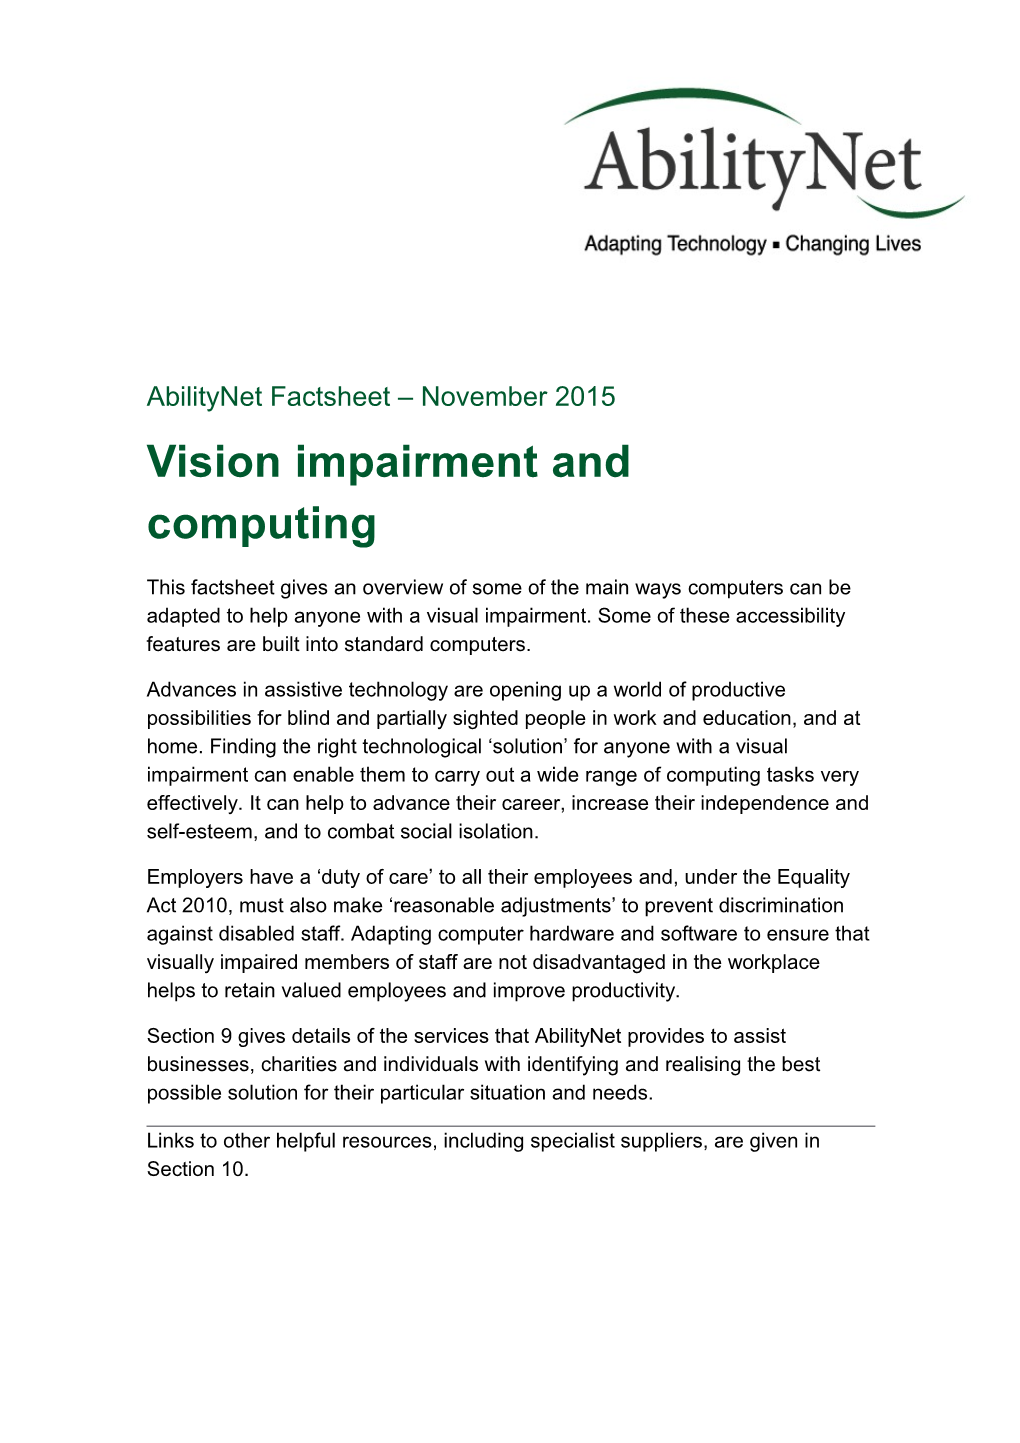 Vision Impairment and Computing